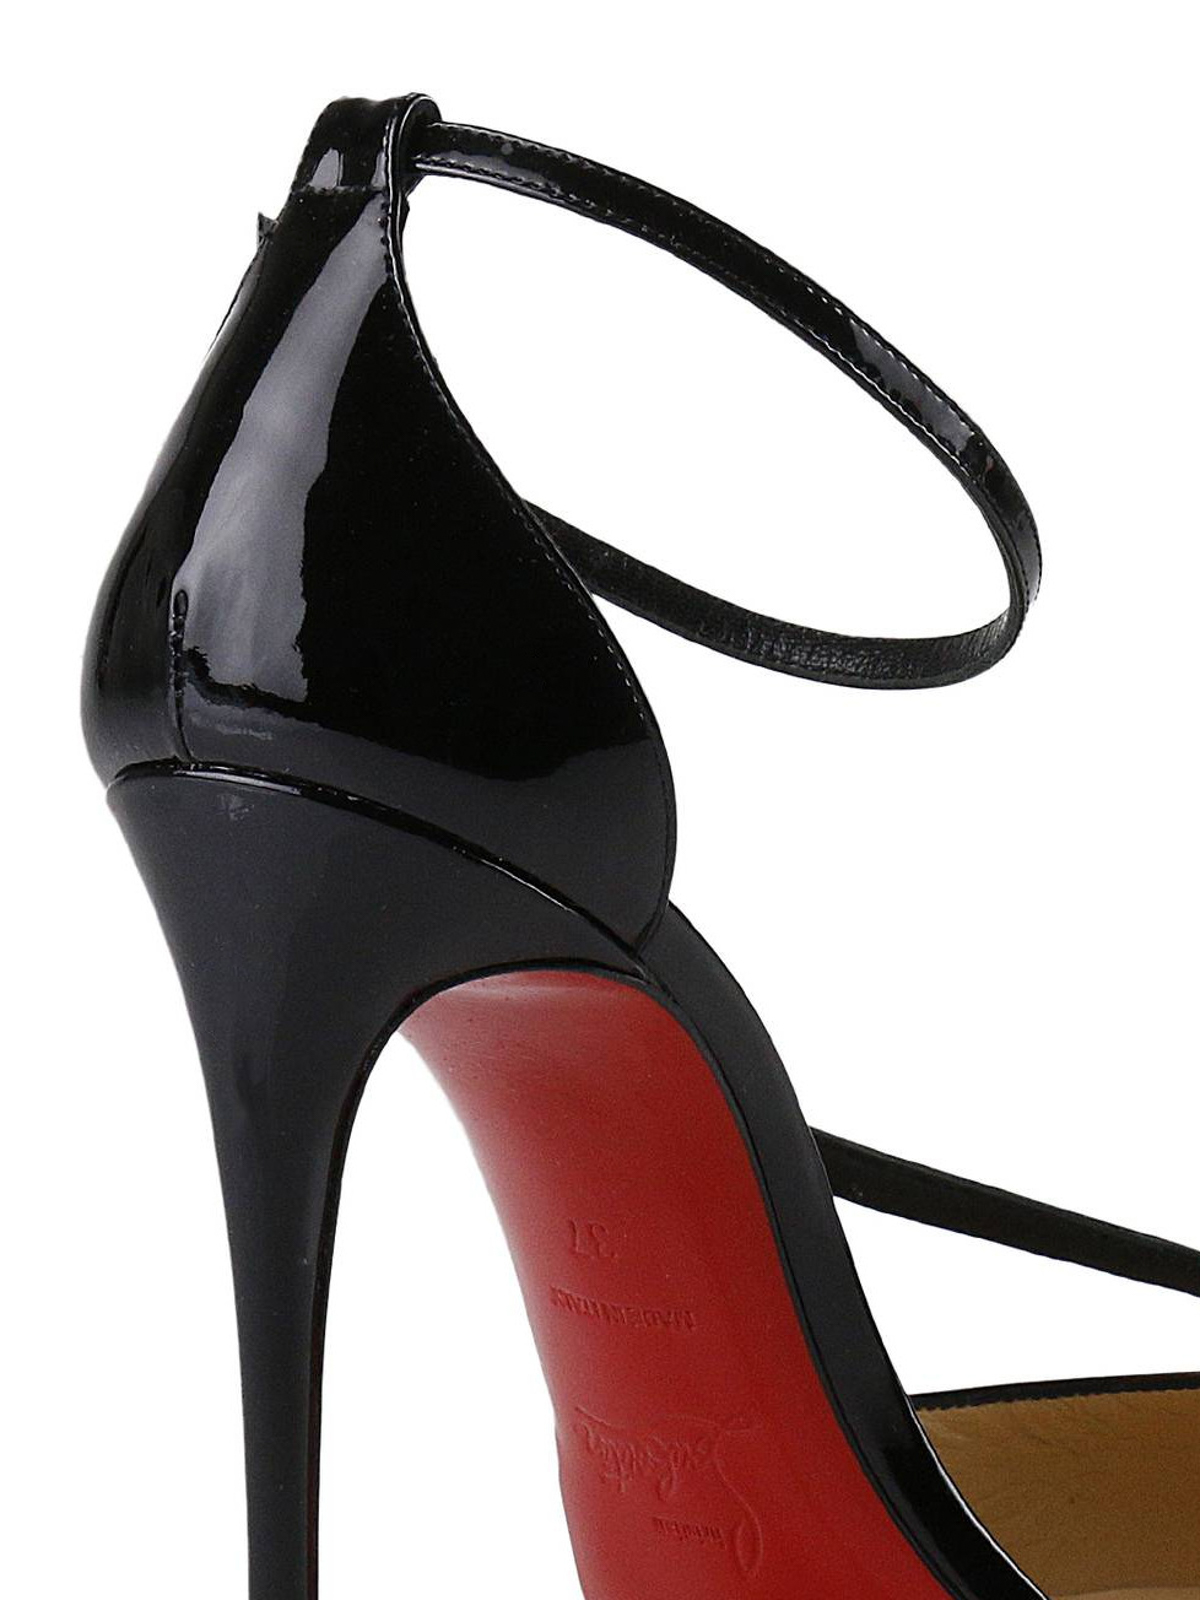 krog mord humane Court shoes Christian Louboutin - Fliketta patent d'Orsay court shoes -  3170439BK01